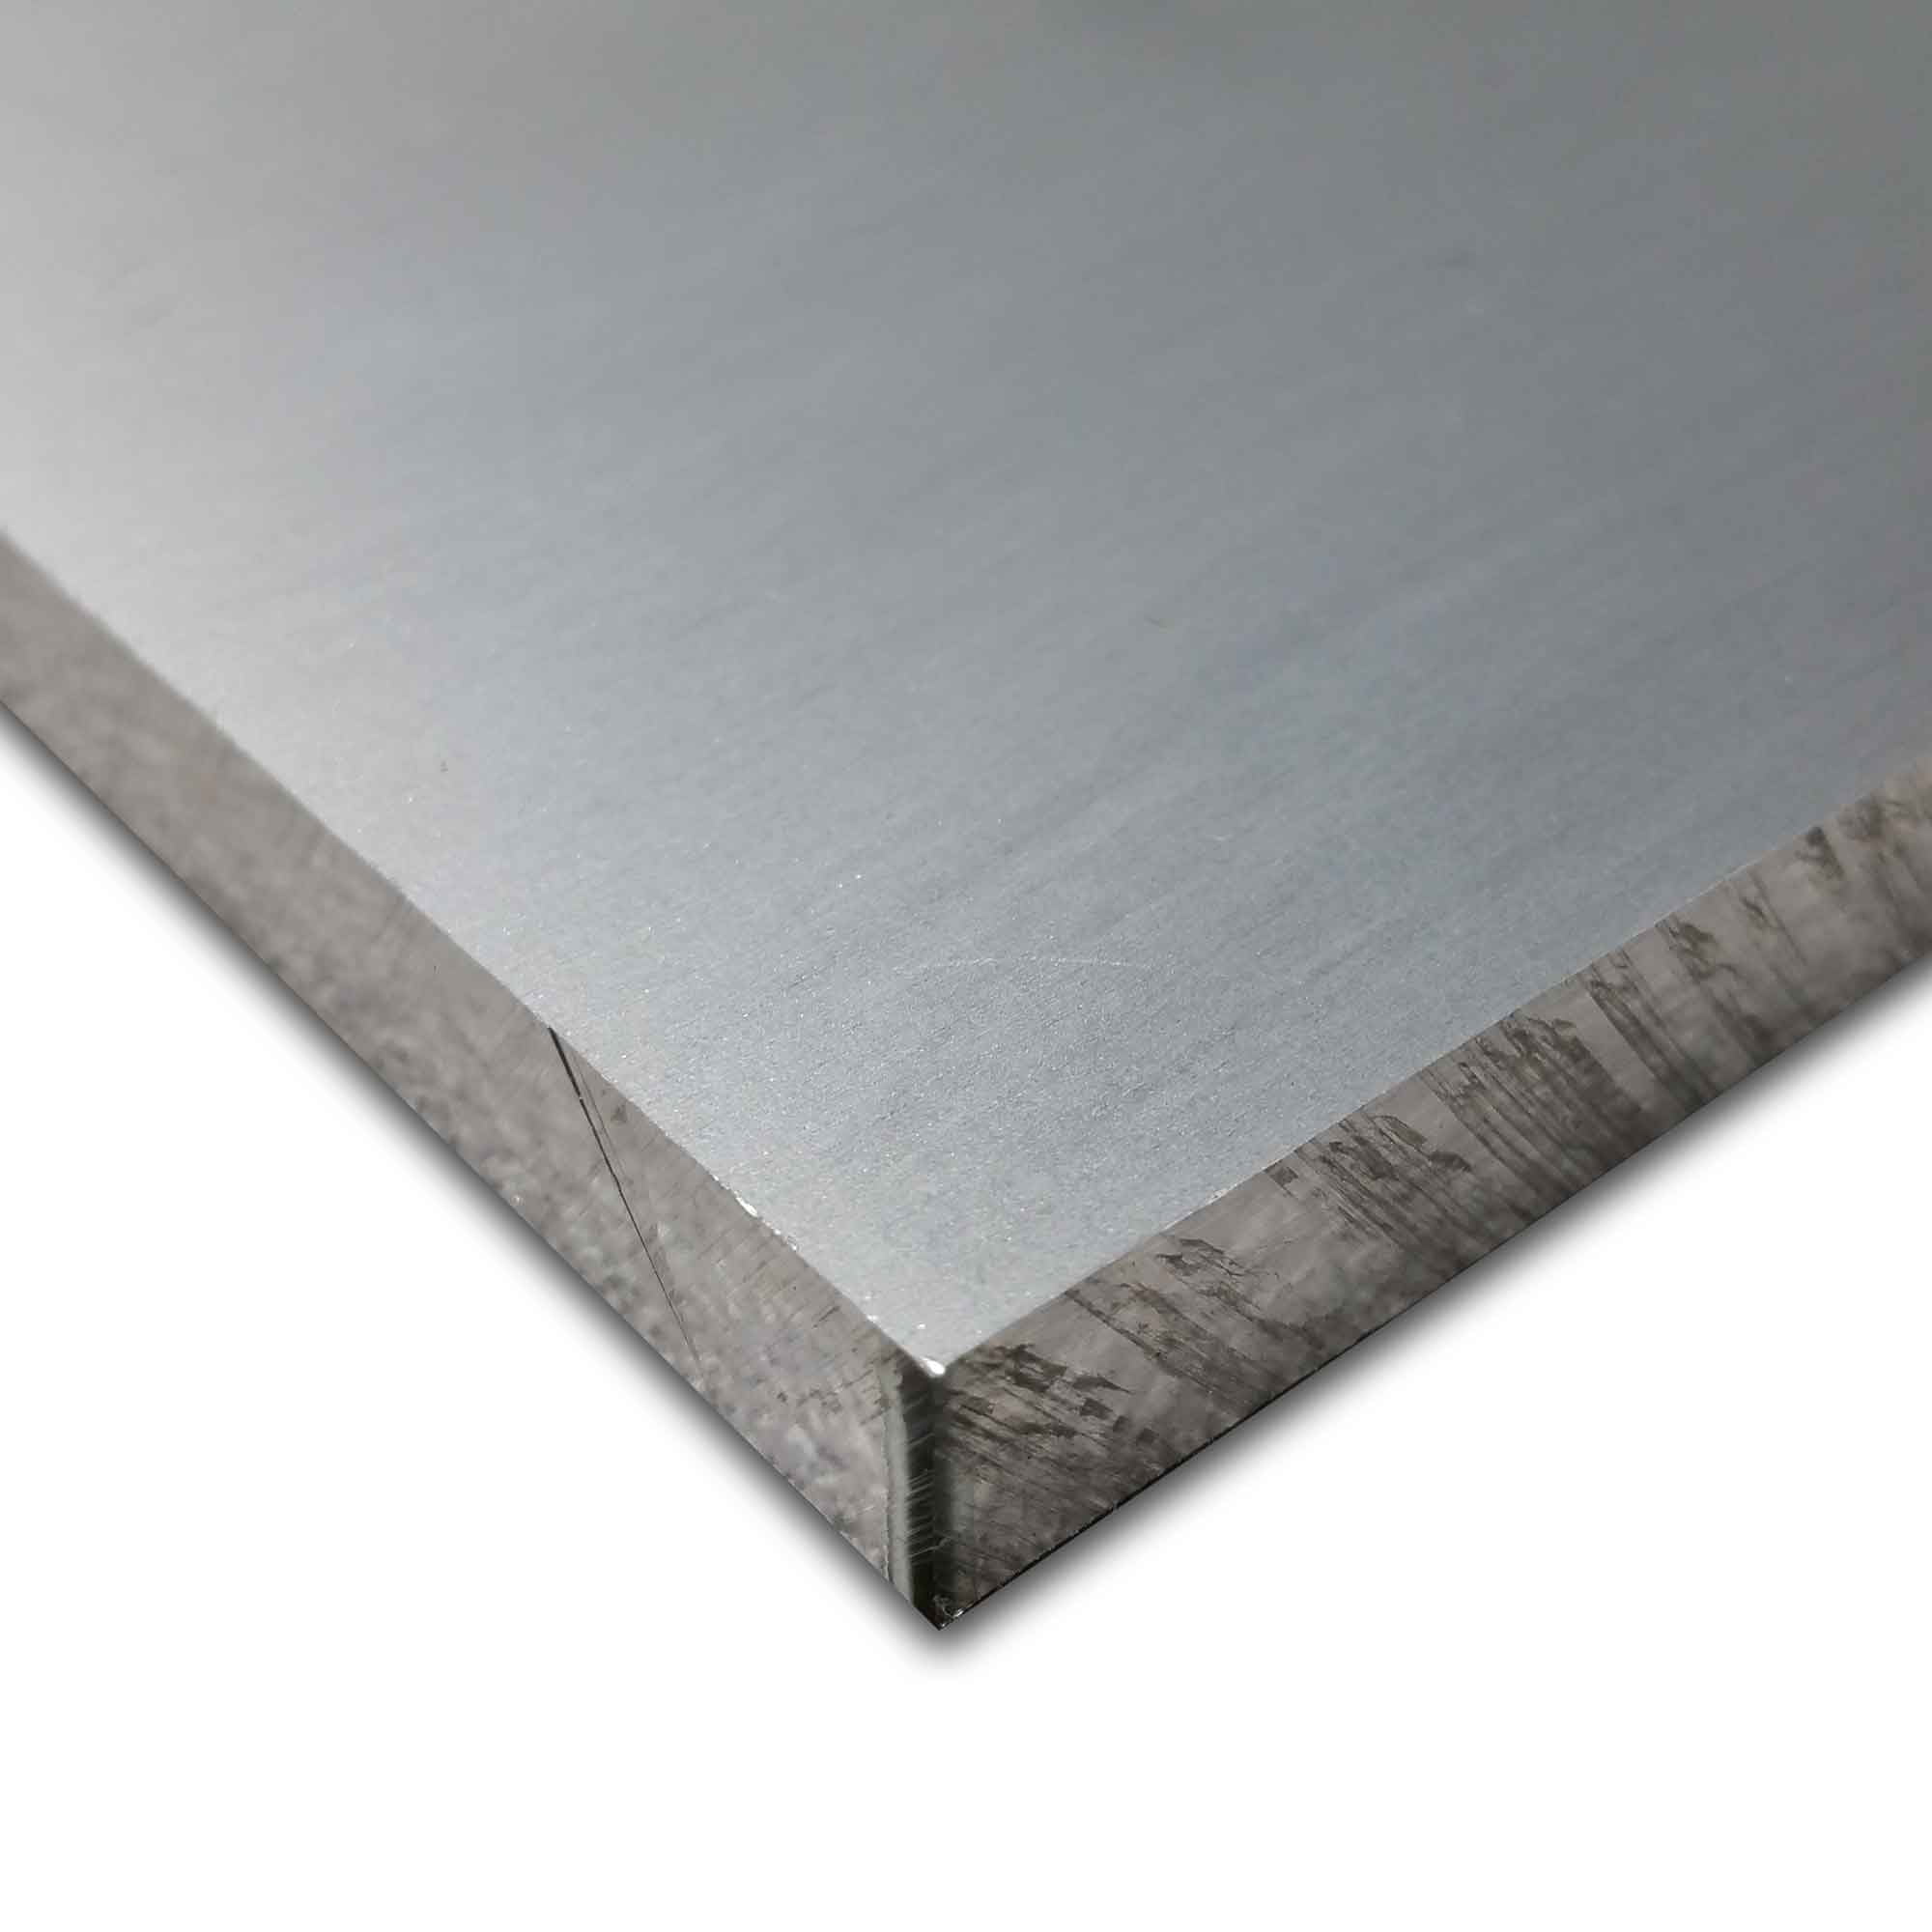 2-1/4" T7451 Plate 2.25" x 12" x 24" Aluminum 7050 